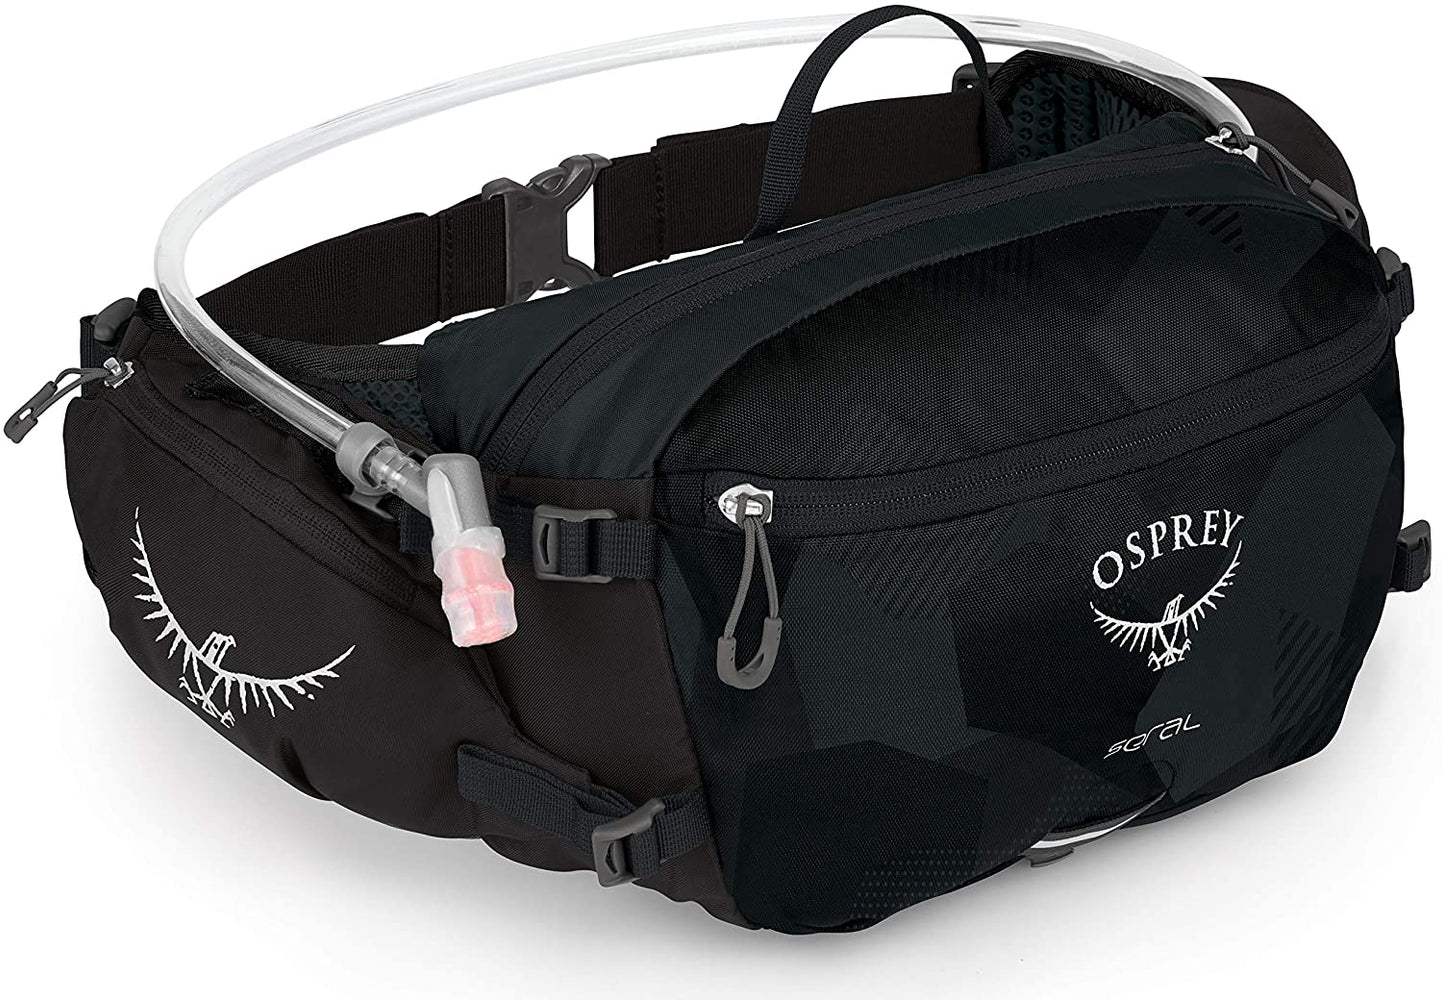 Osprey Seral Lumbar Hydration Pack